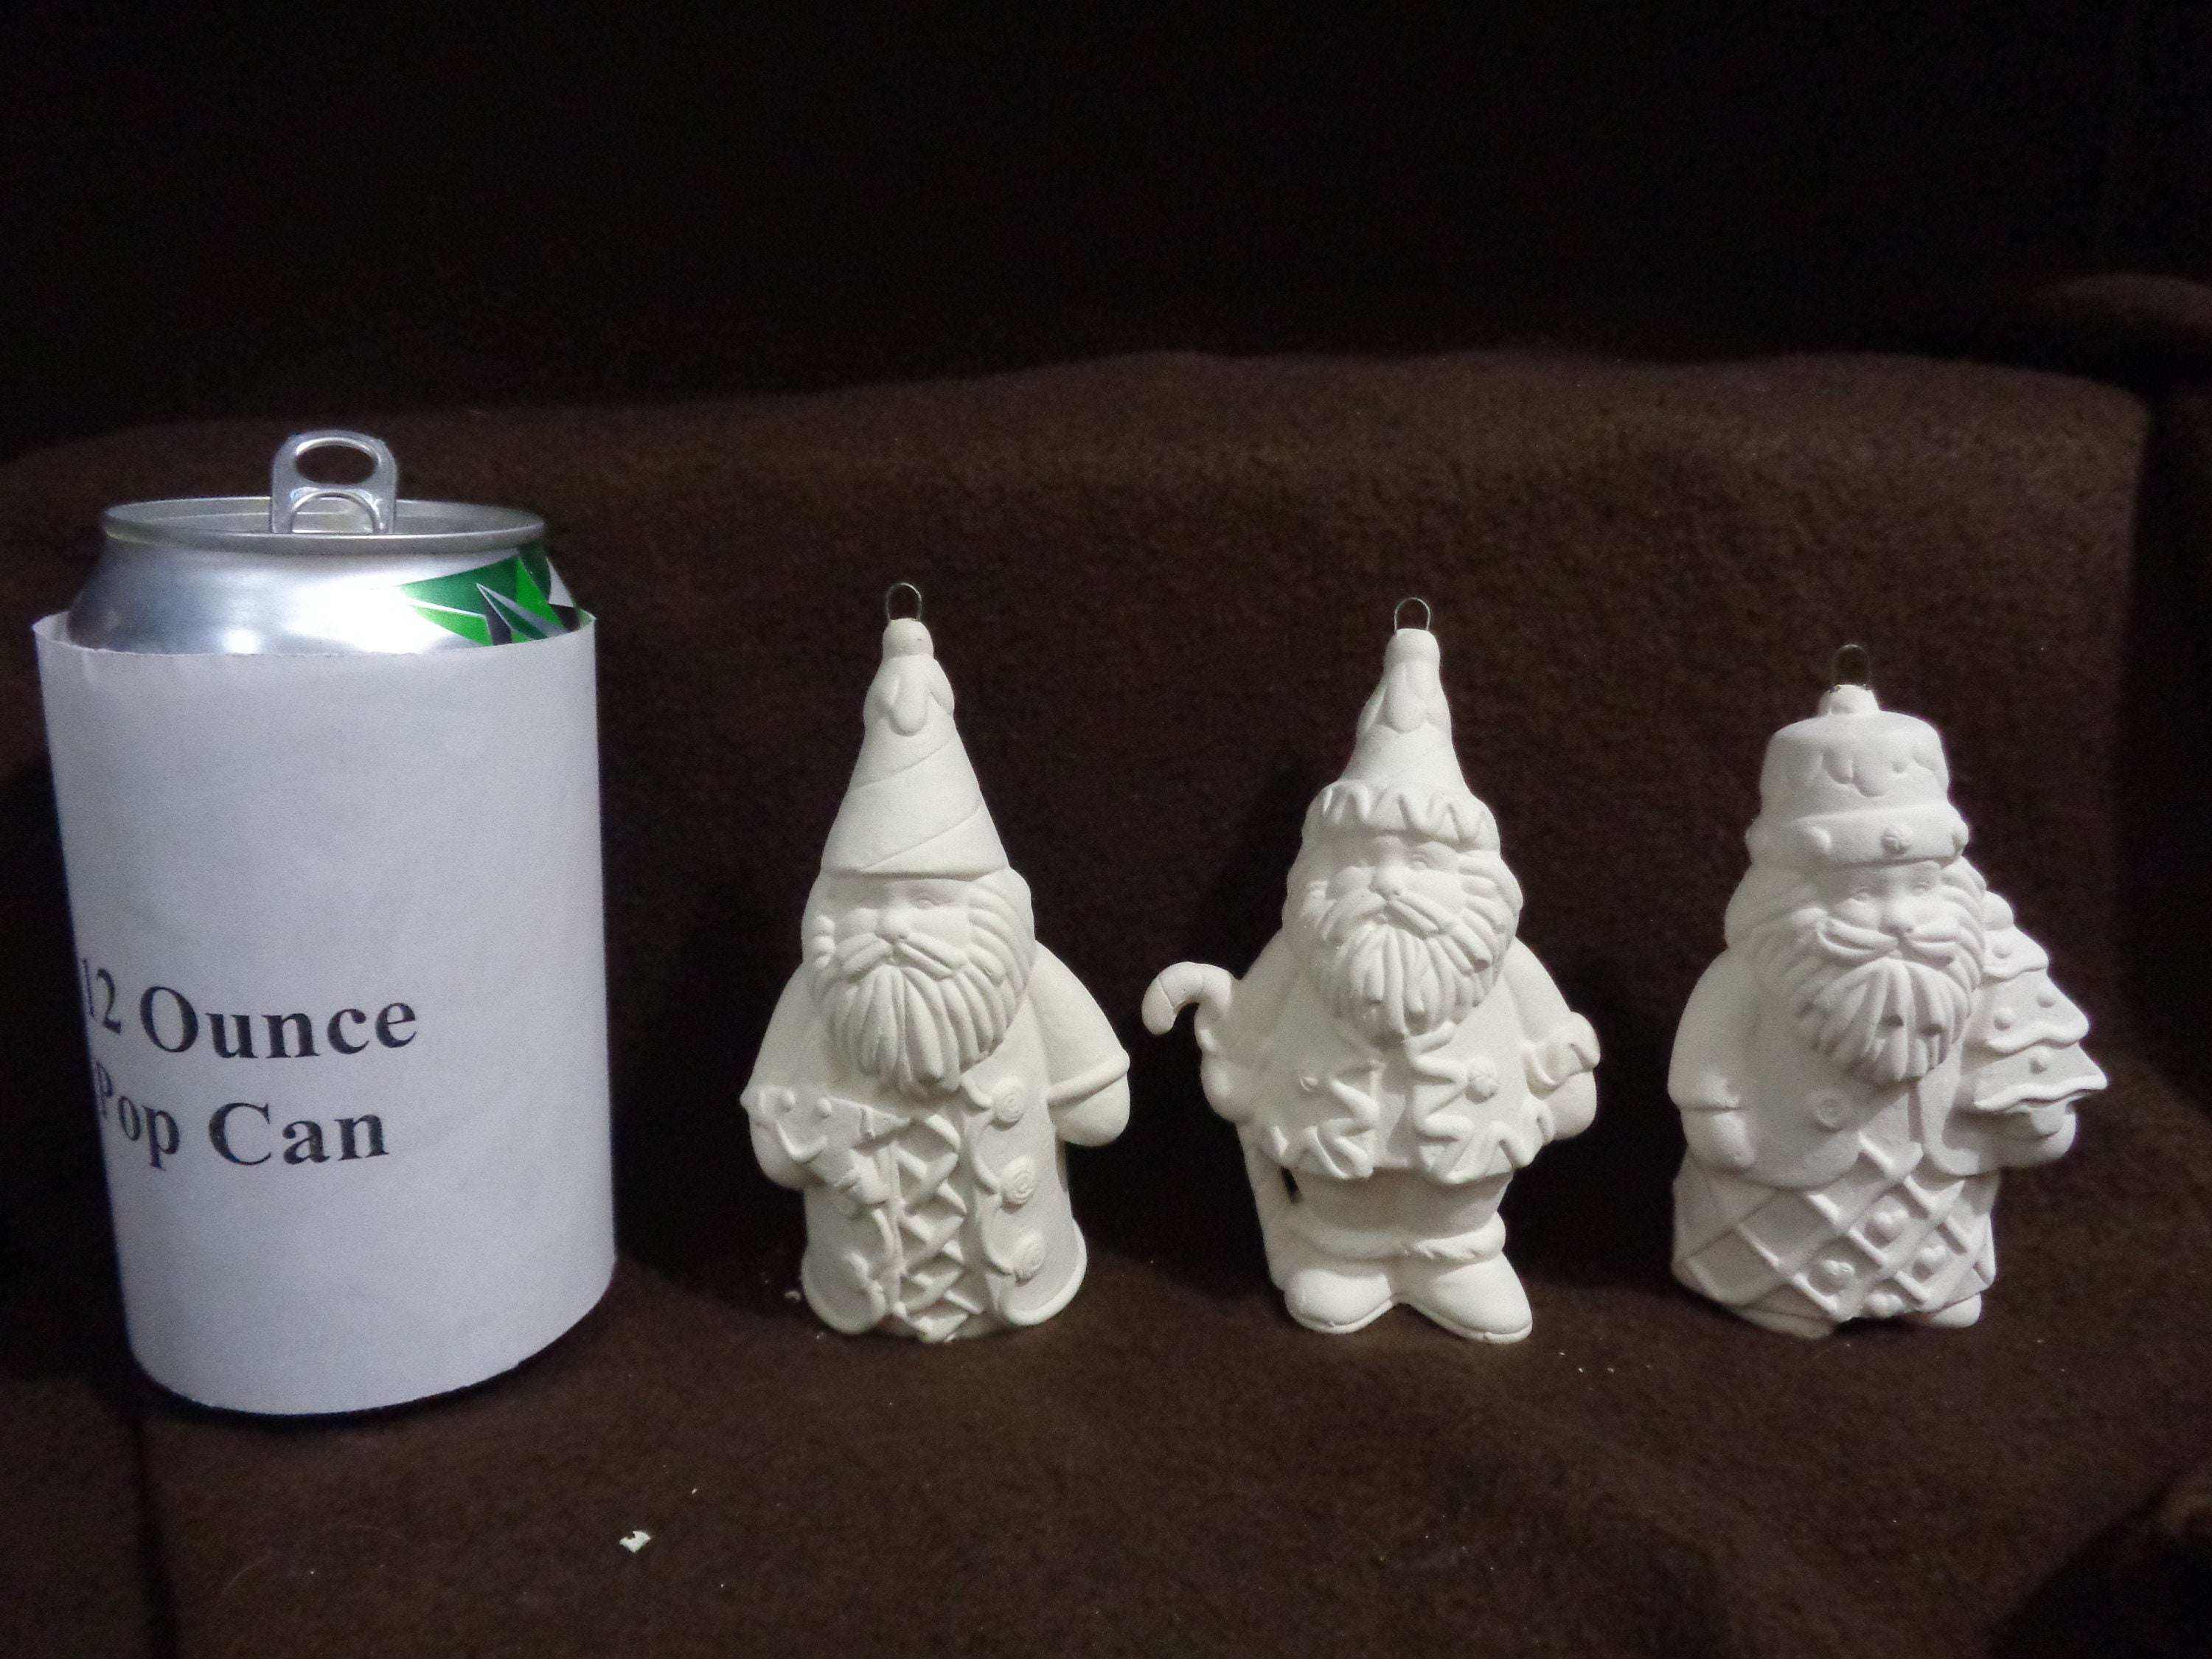 Syhood 24 Pcs Ceramic to Paint Christmas Ornaments Crafts for Kids Paint  Your Own Kit DIY Ceramics Santa Snowmen Gingerbread Men Ceramic Christmas